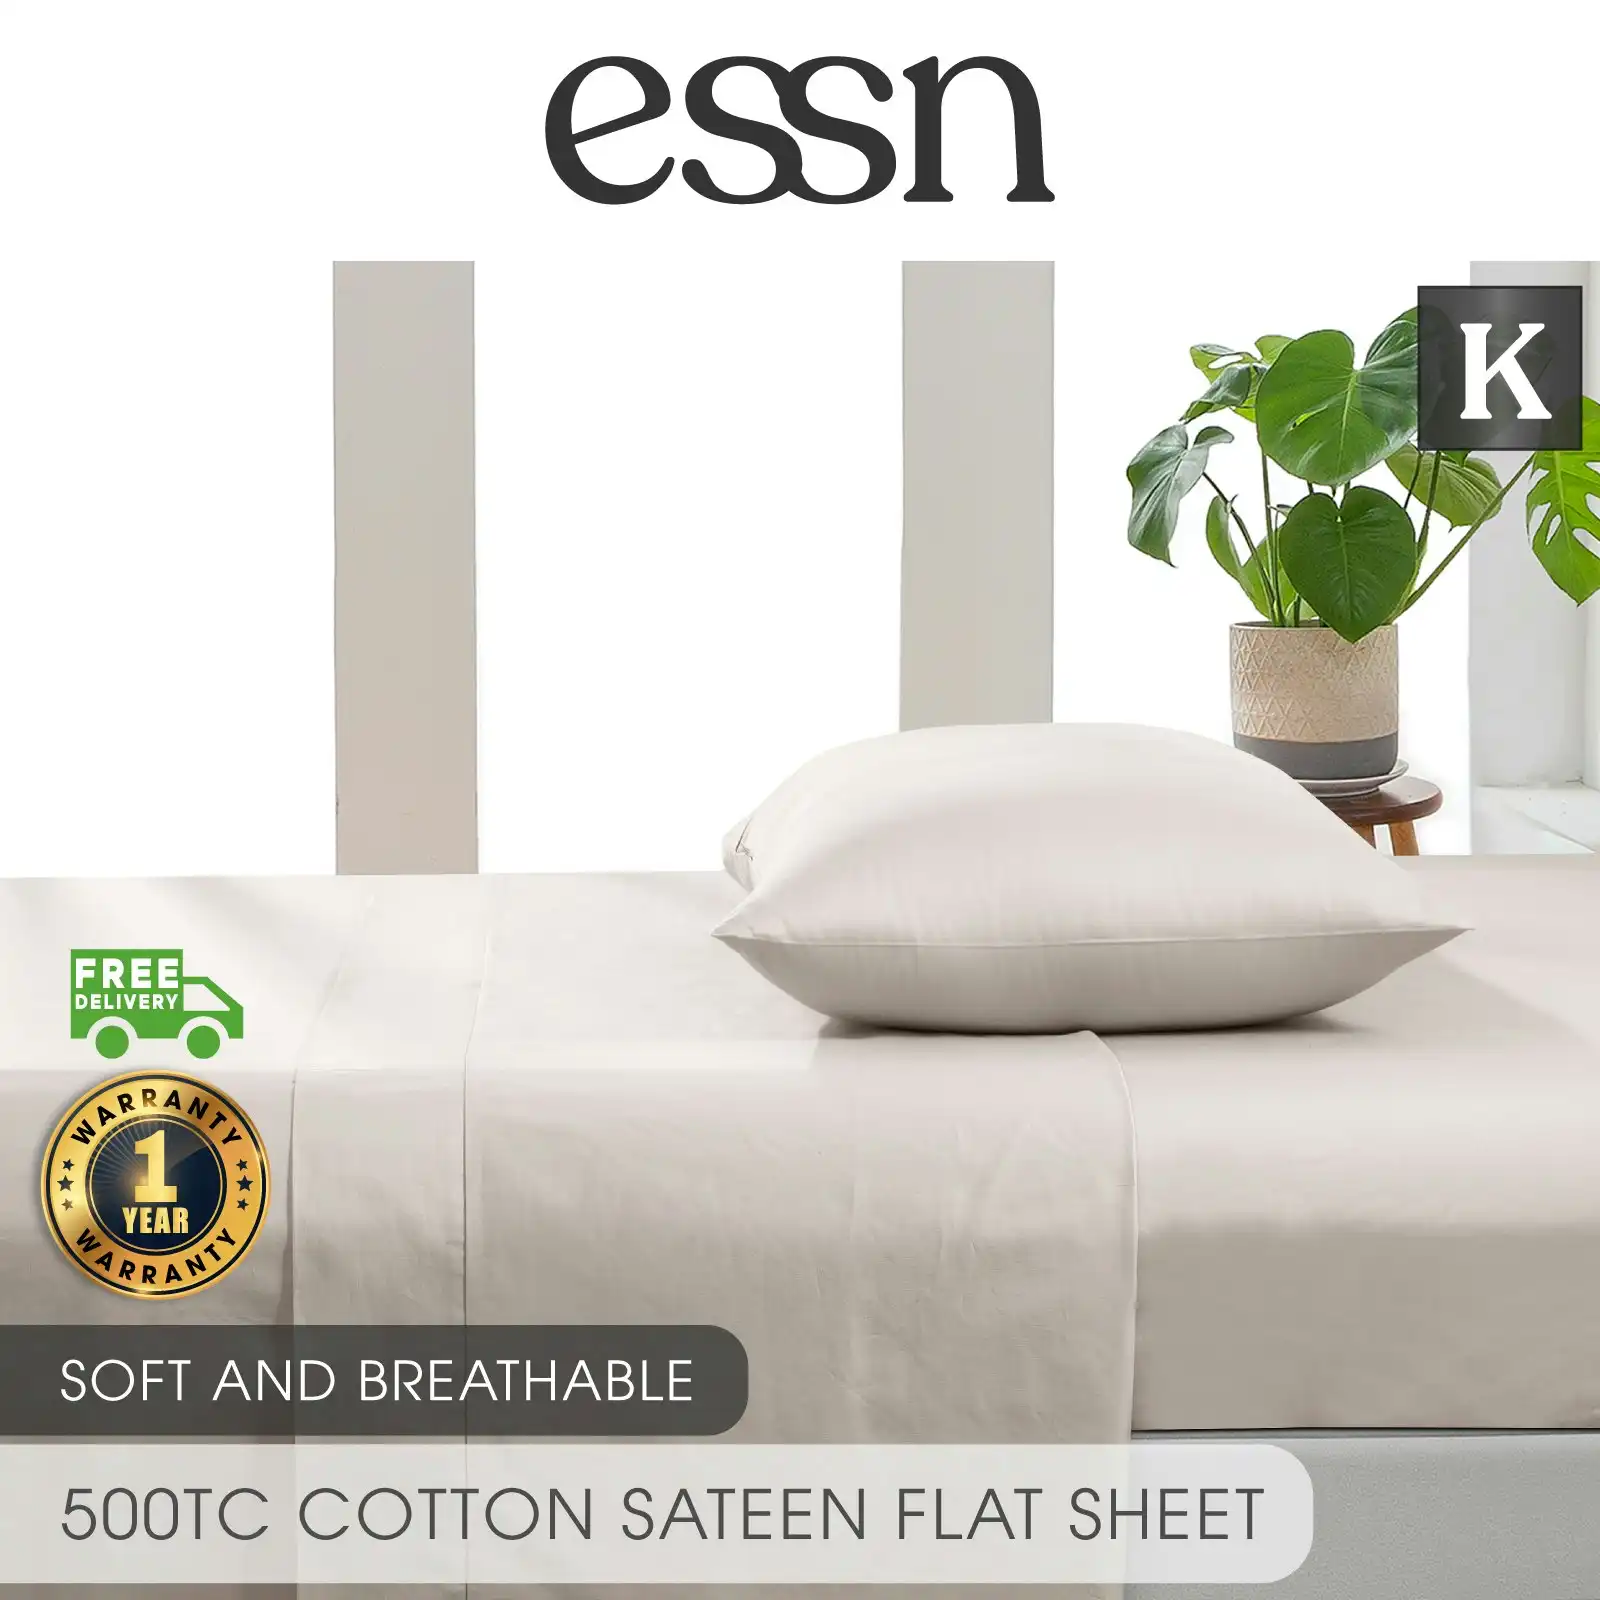 ESSN 500TC Cotton Sateen Flat Sheet Stone King Bed